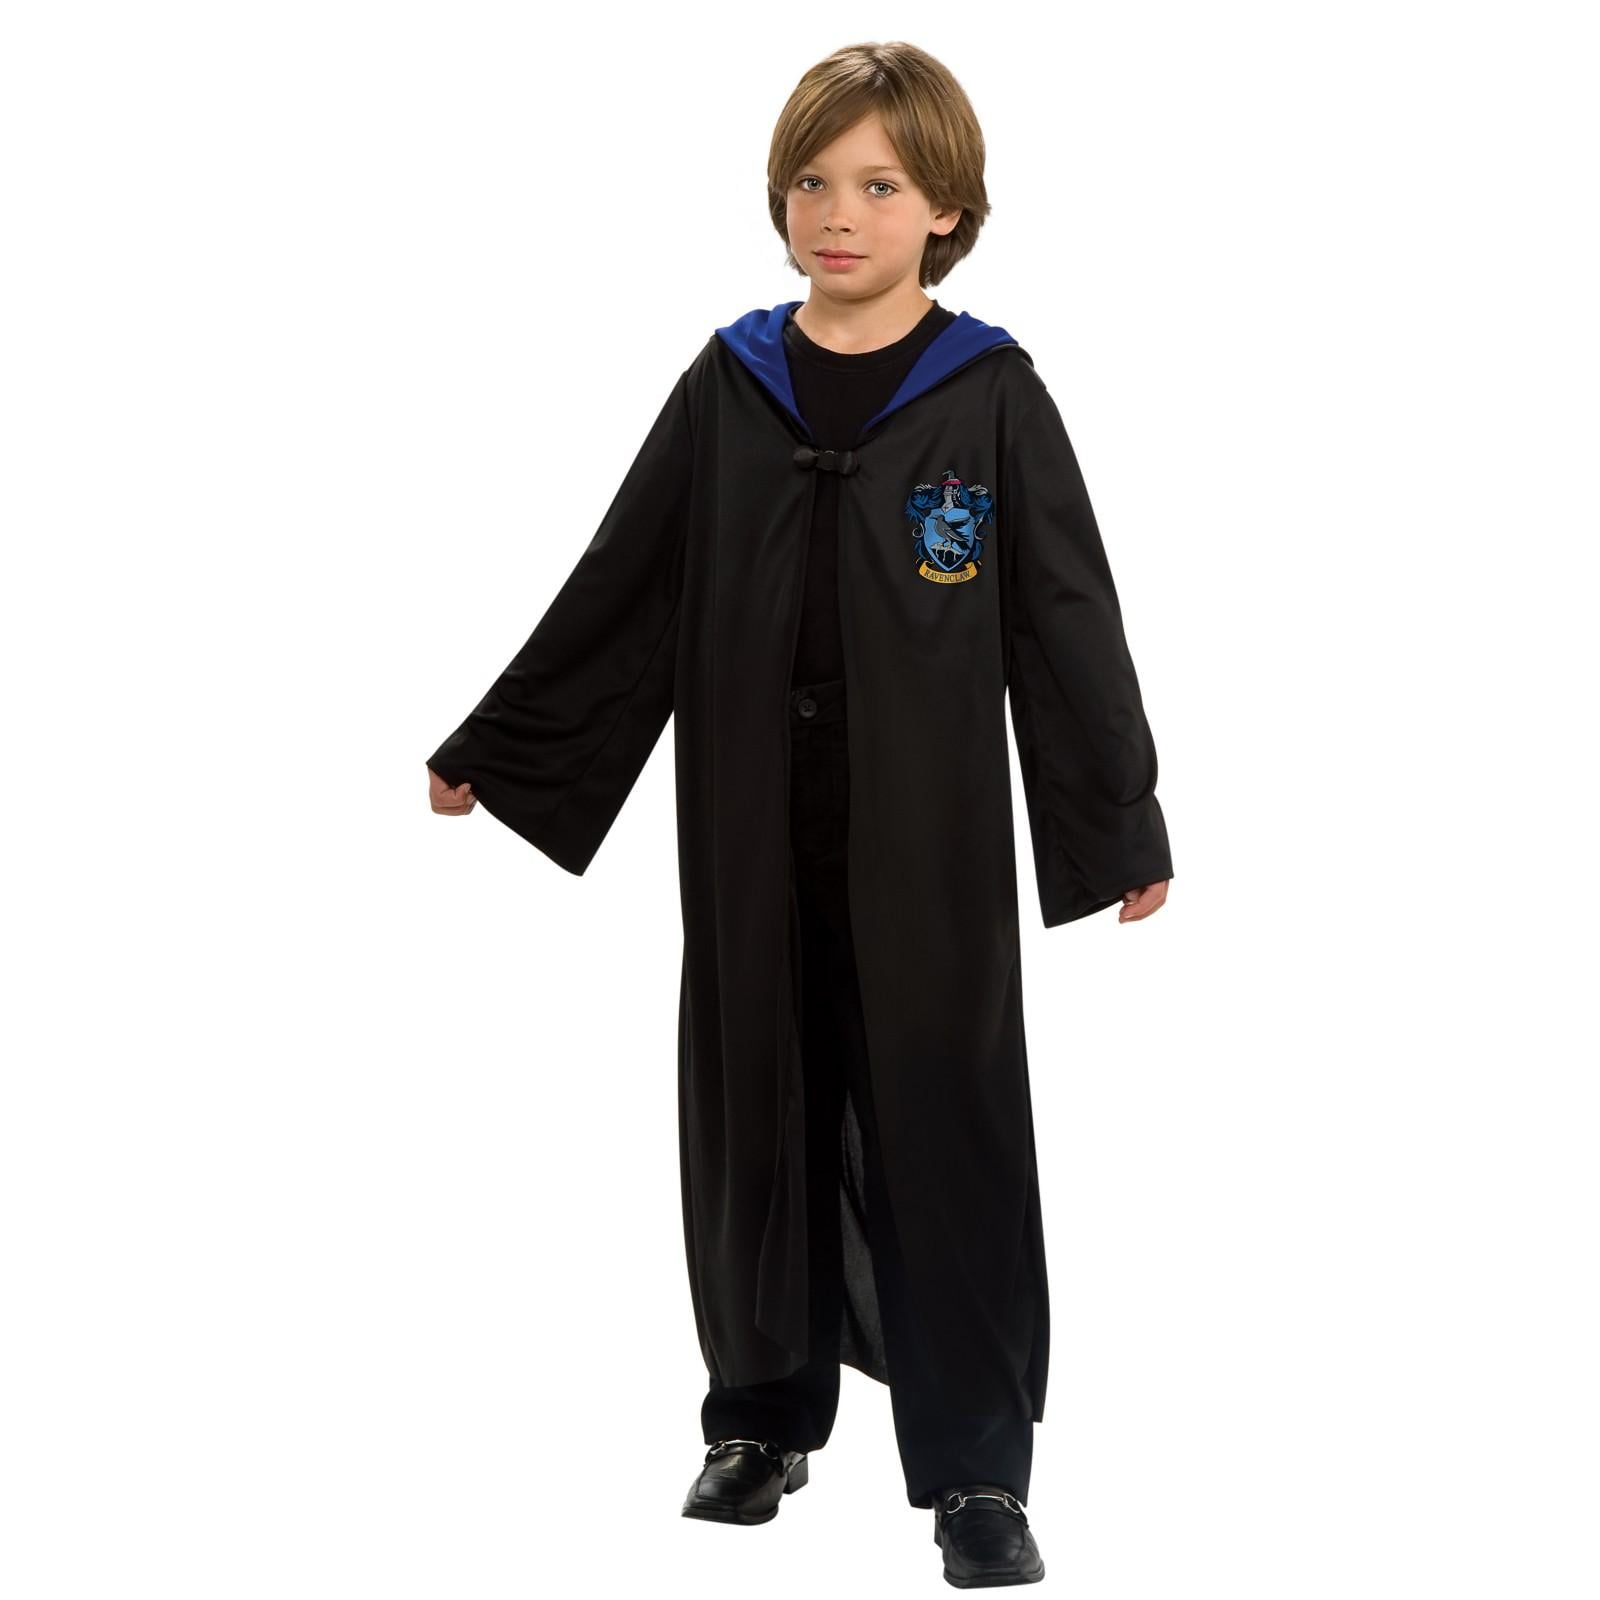 Ravenclaw Socks Harry Potter Fancy Dress Up Halloween Child Costume Accessory 